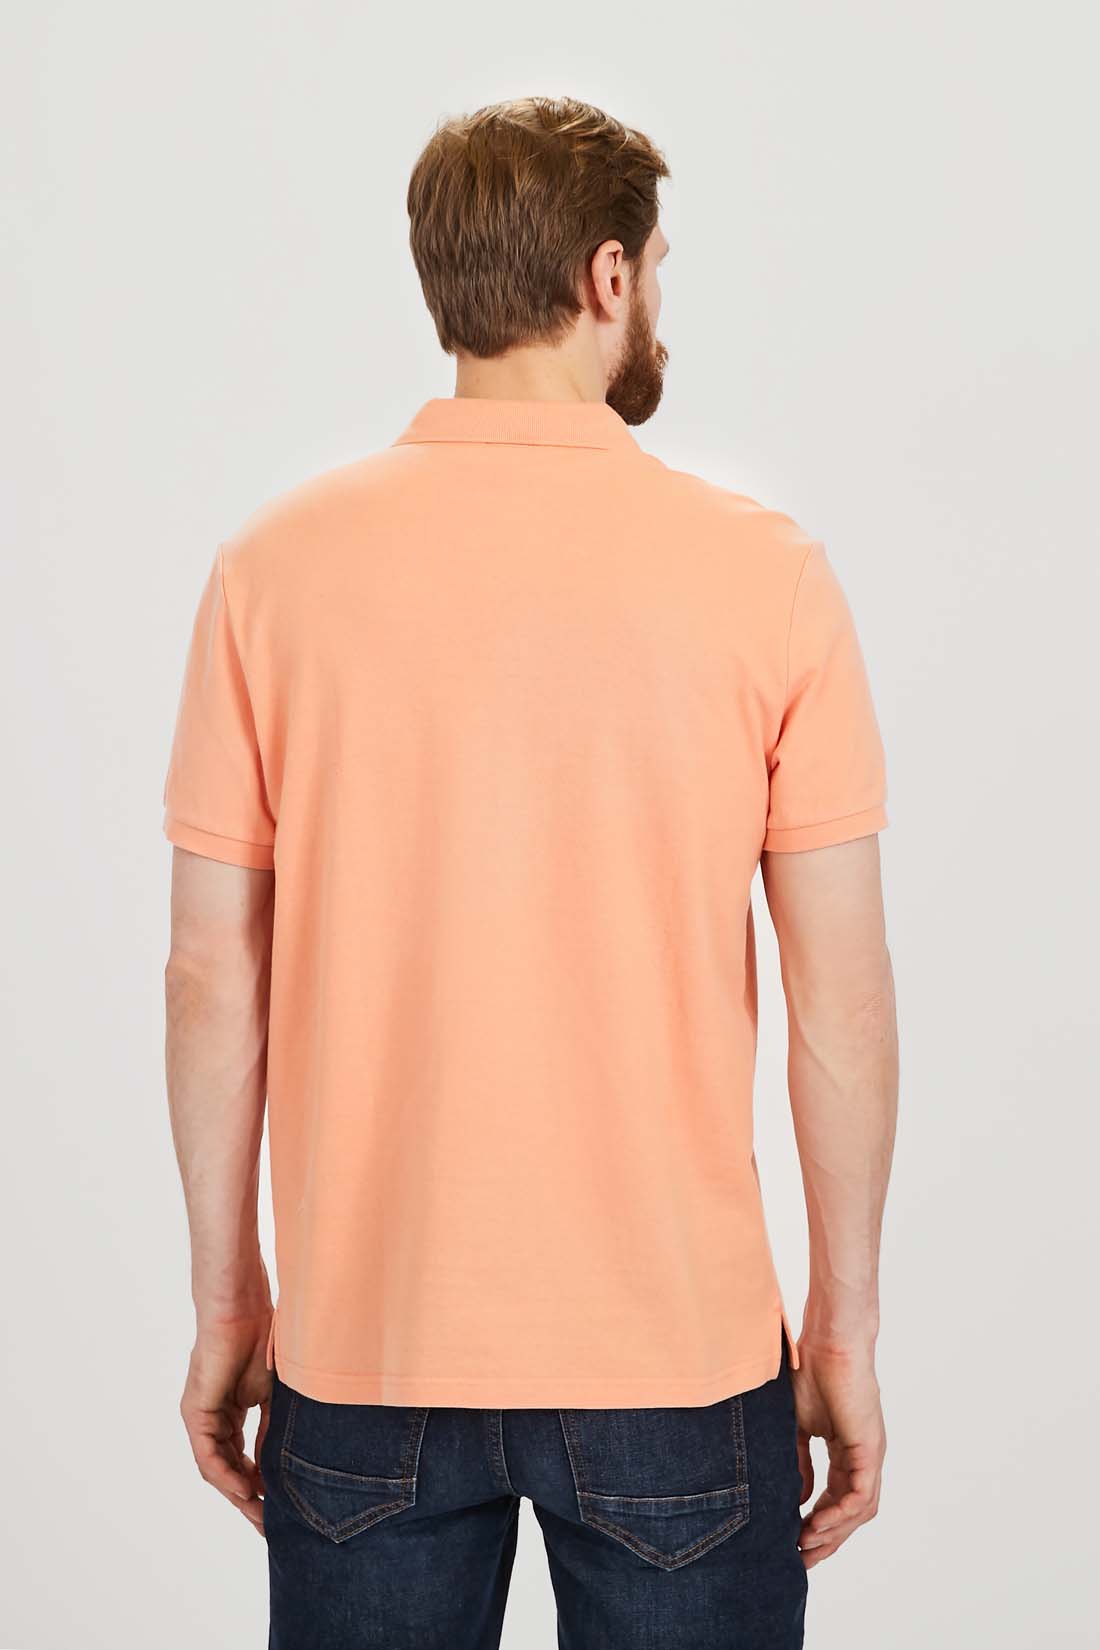 Поло (арт. baon B7022012), размер S, цвет оранжевый Поло (арт. baon B7022012) - фото 2